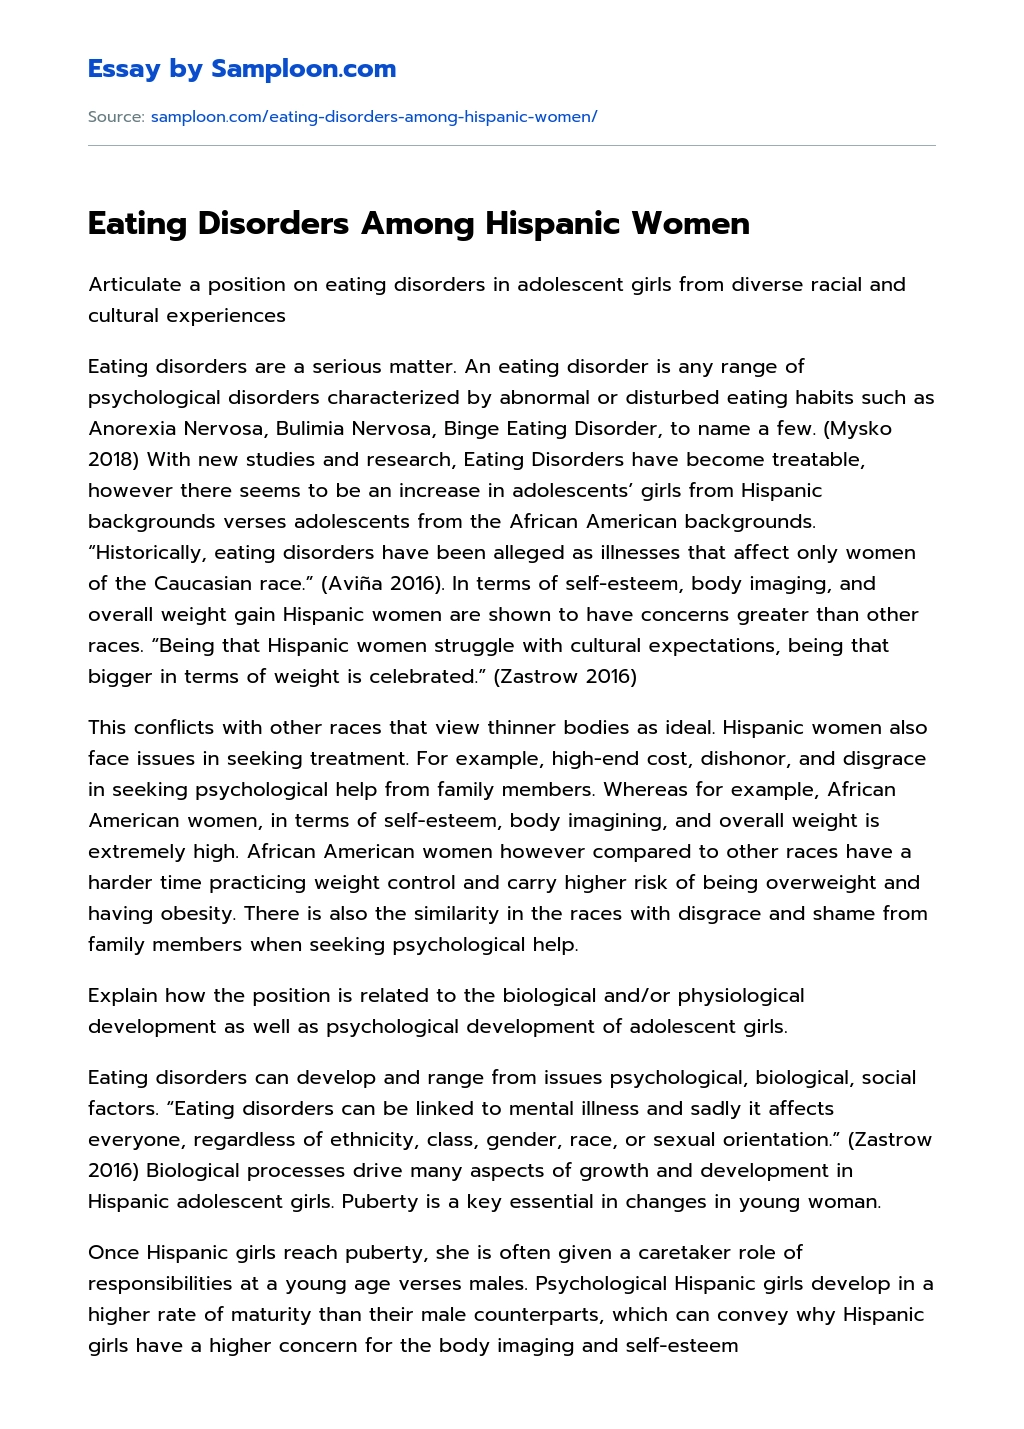 Eating Disorders Among Hispanic Women essay